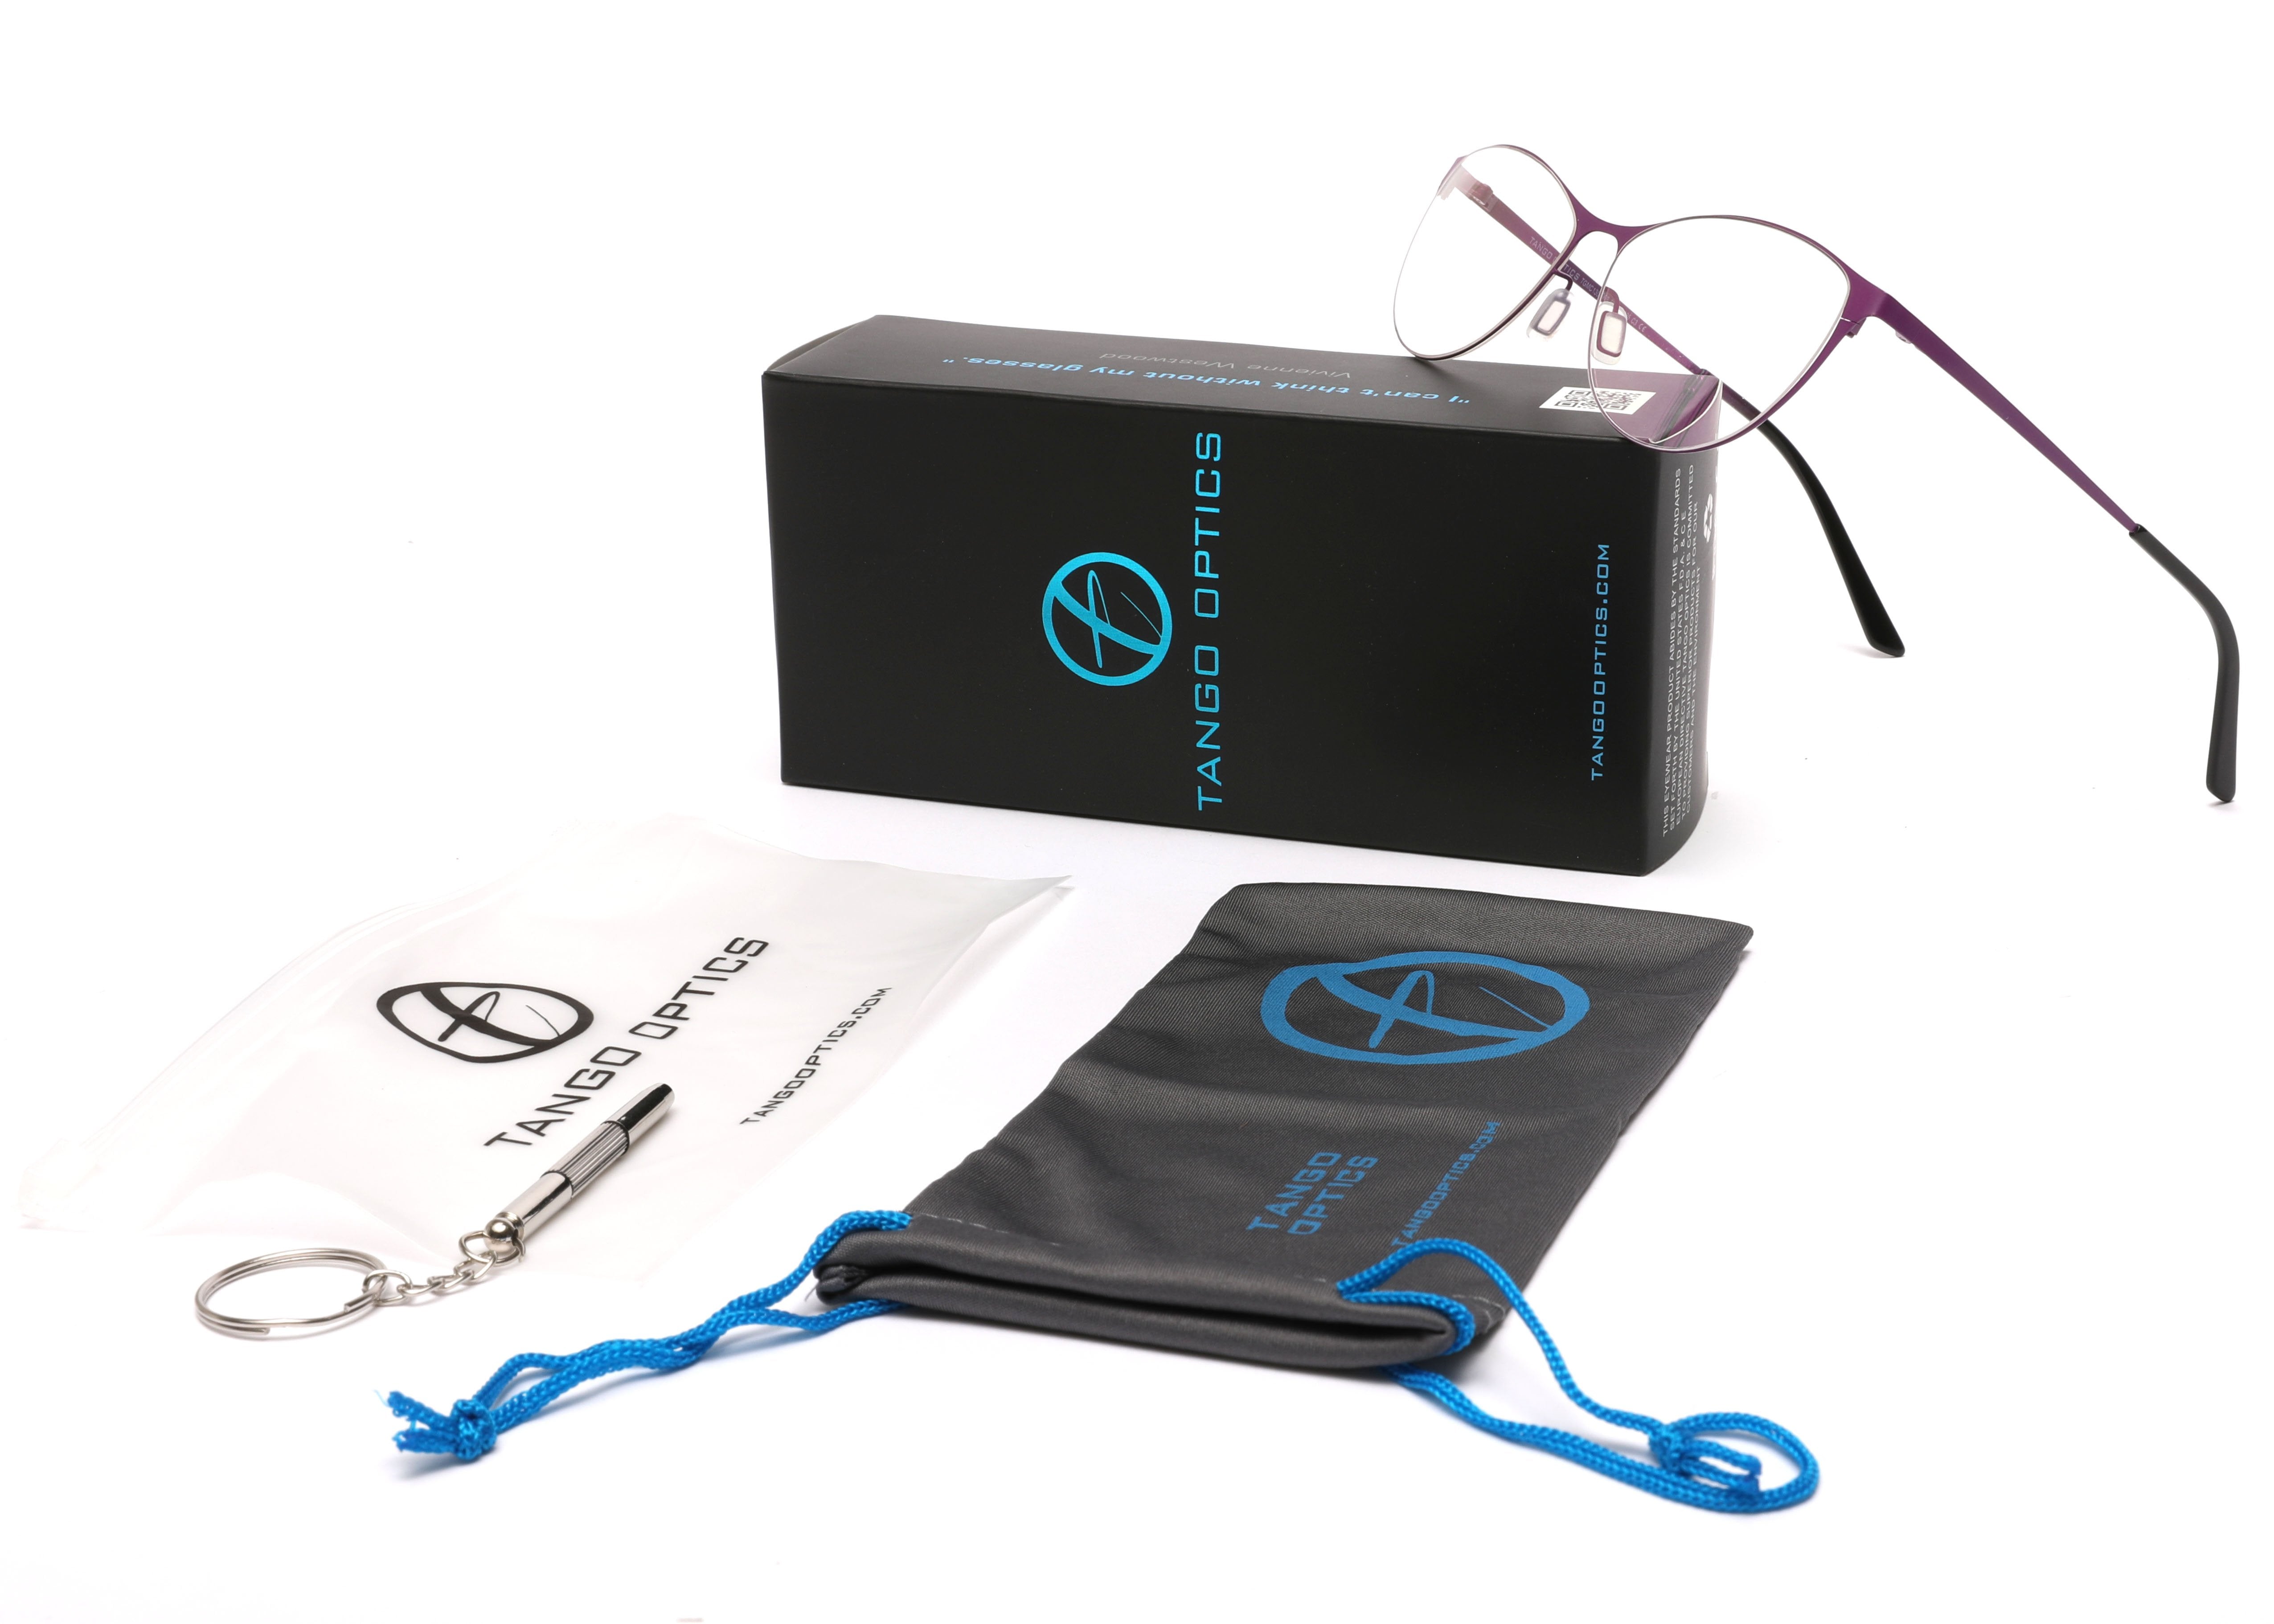 Tango Optics Metal Cateye Optical Eyeglasses Frame Flexible Stainless Steel Purple For Prescription Lens-Samba Shades